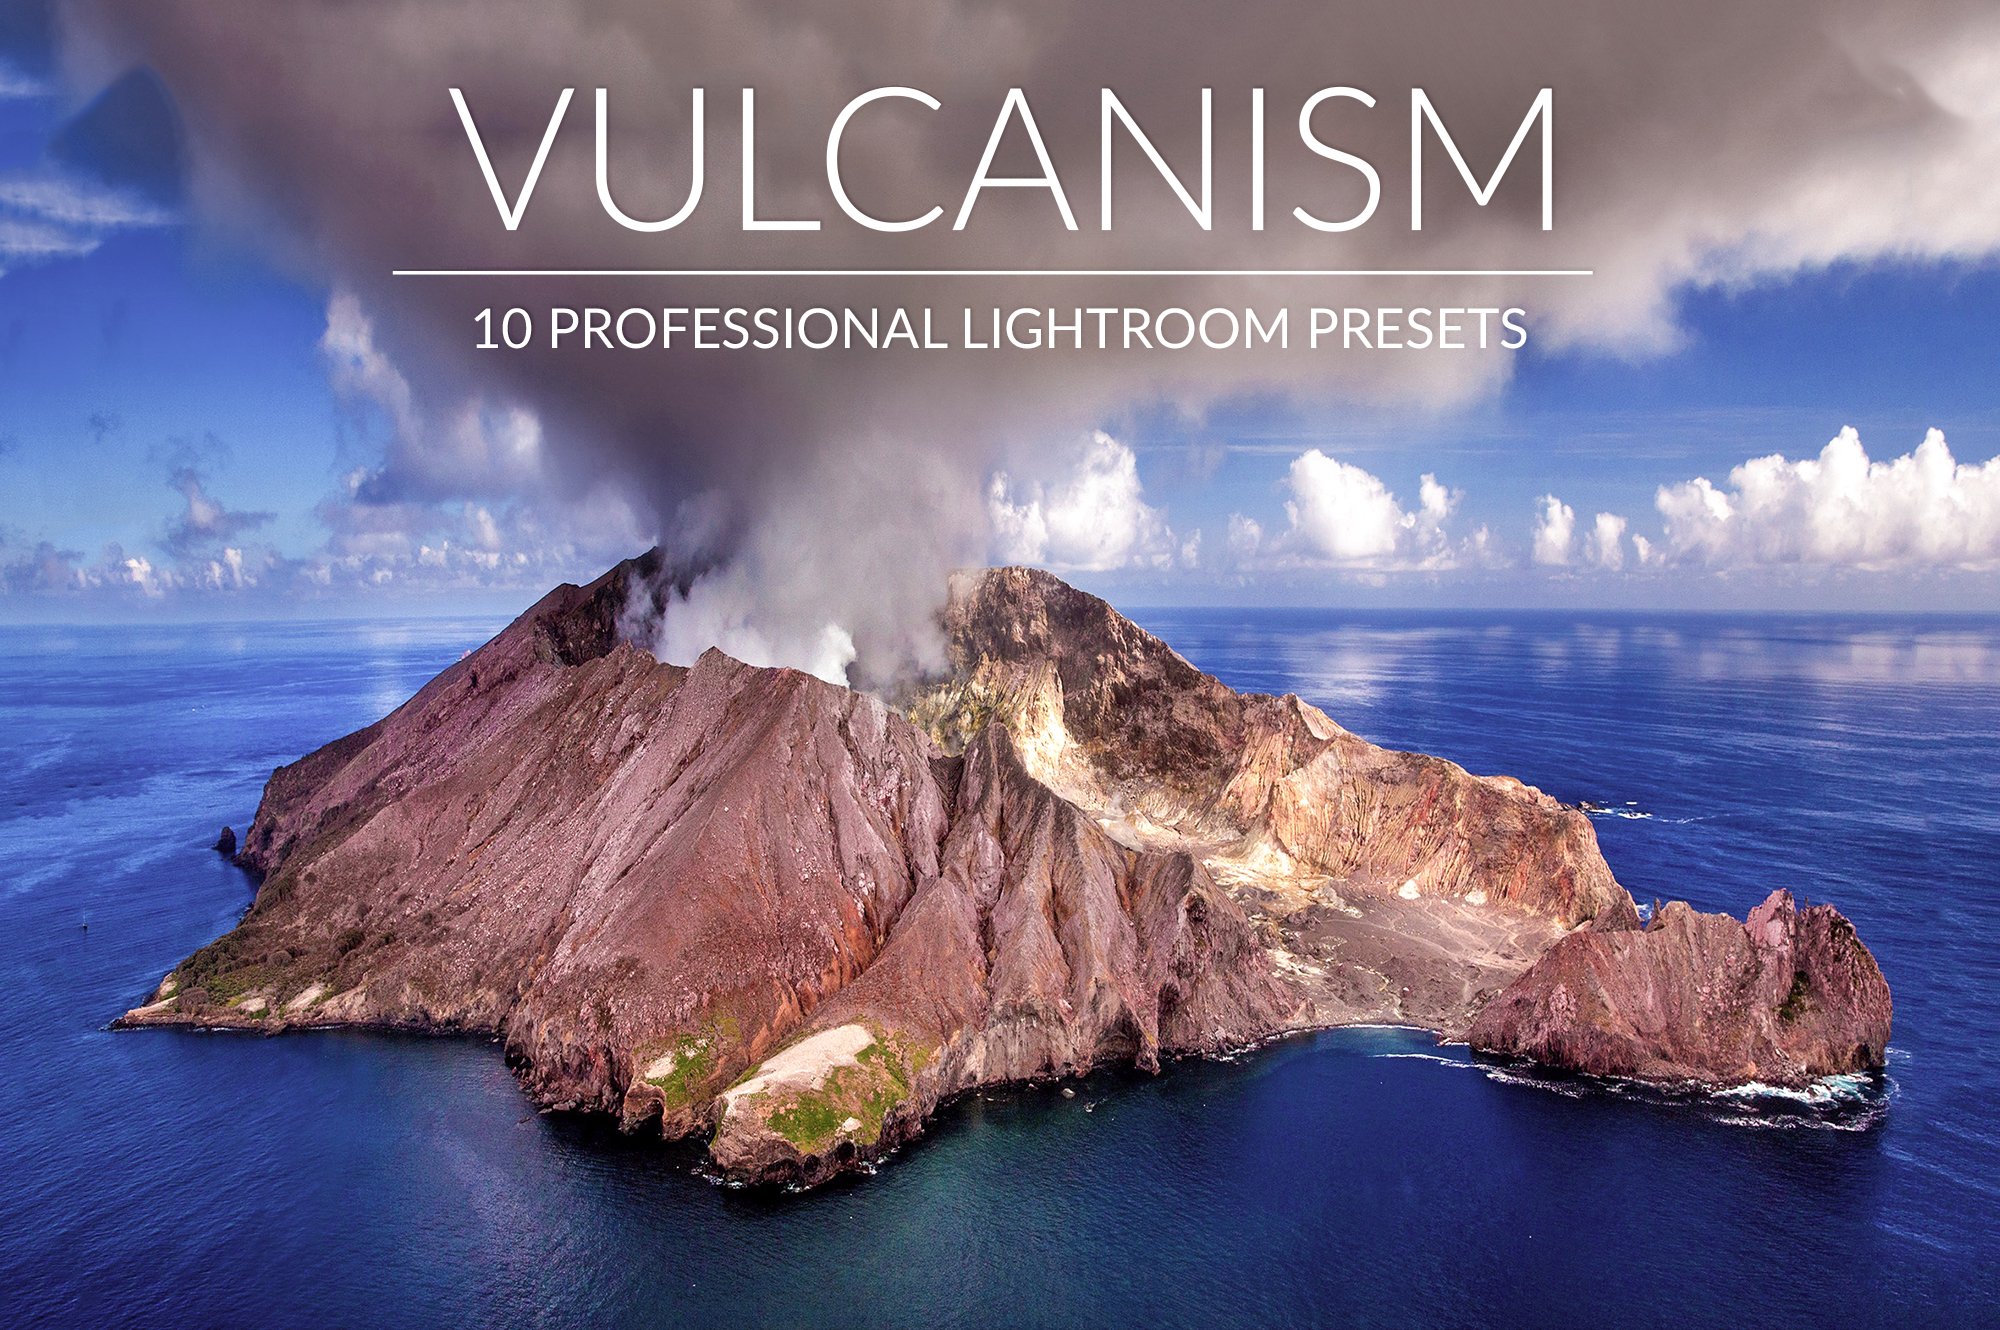 Vulcanism Lr Presetscover image.